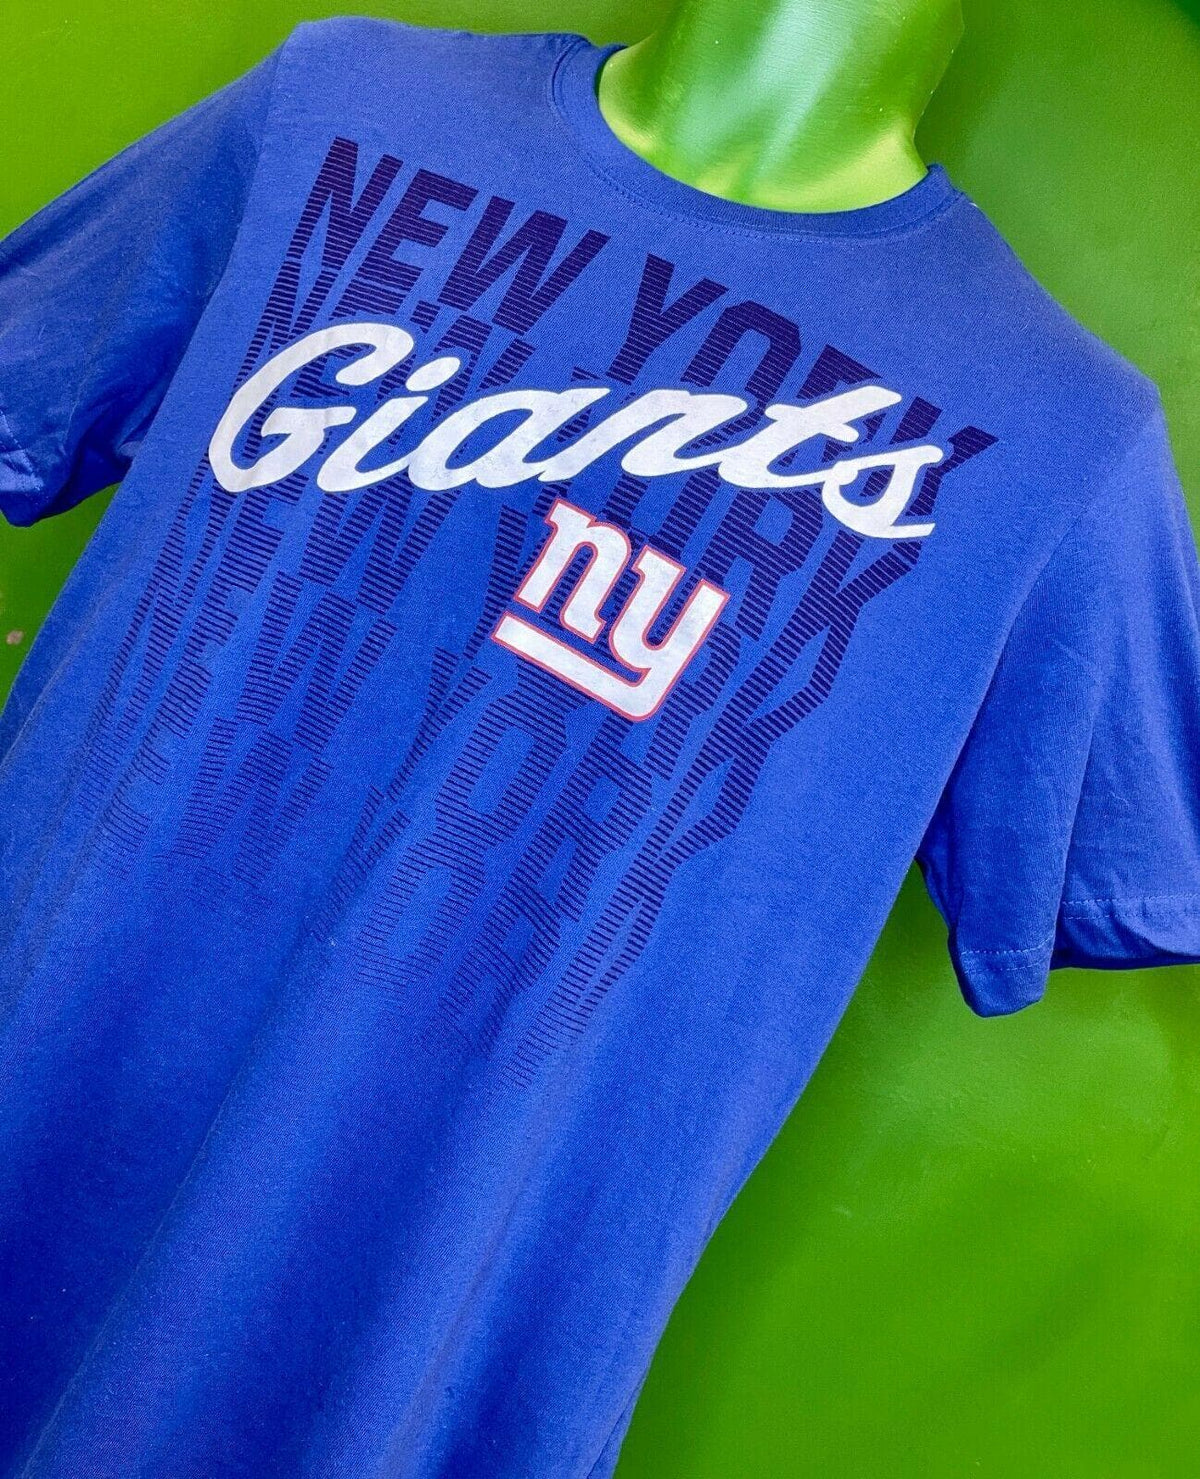 NFL New York Giants Majestic Women's Plus Size T-Shirt 3X-Large NWT